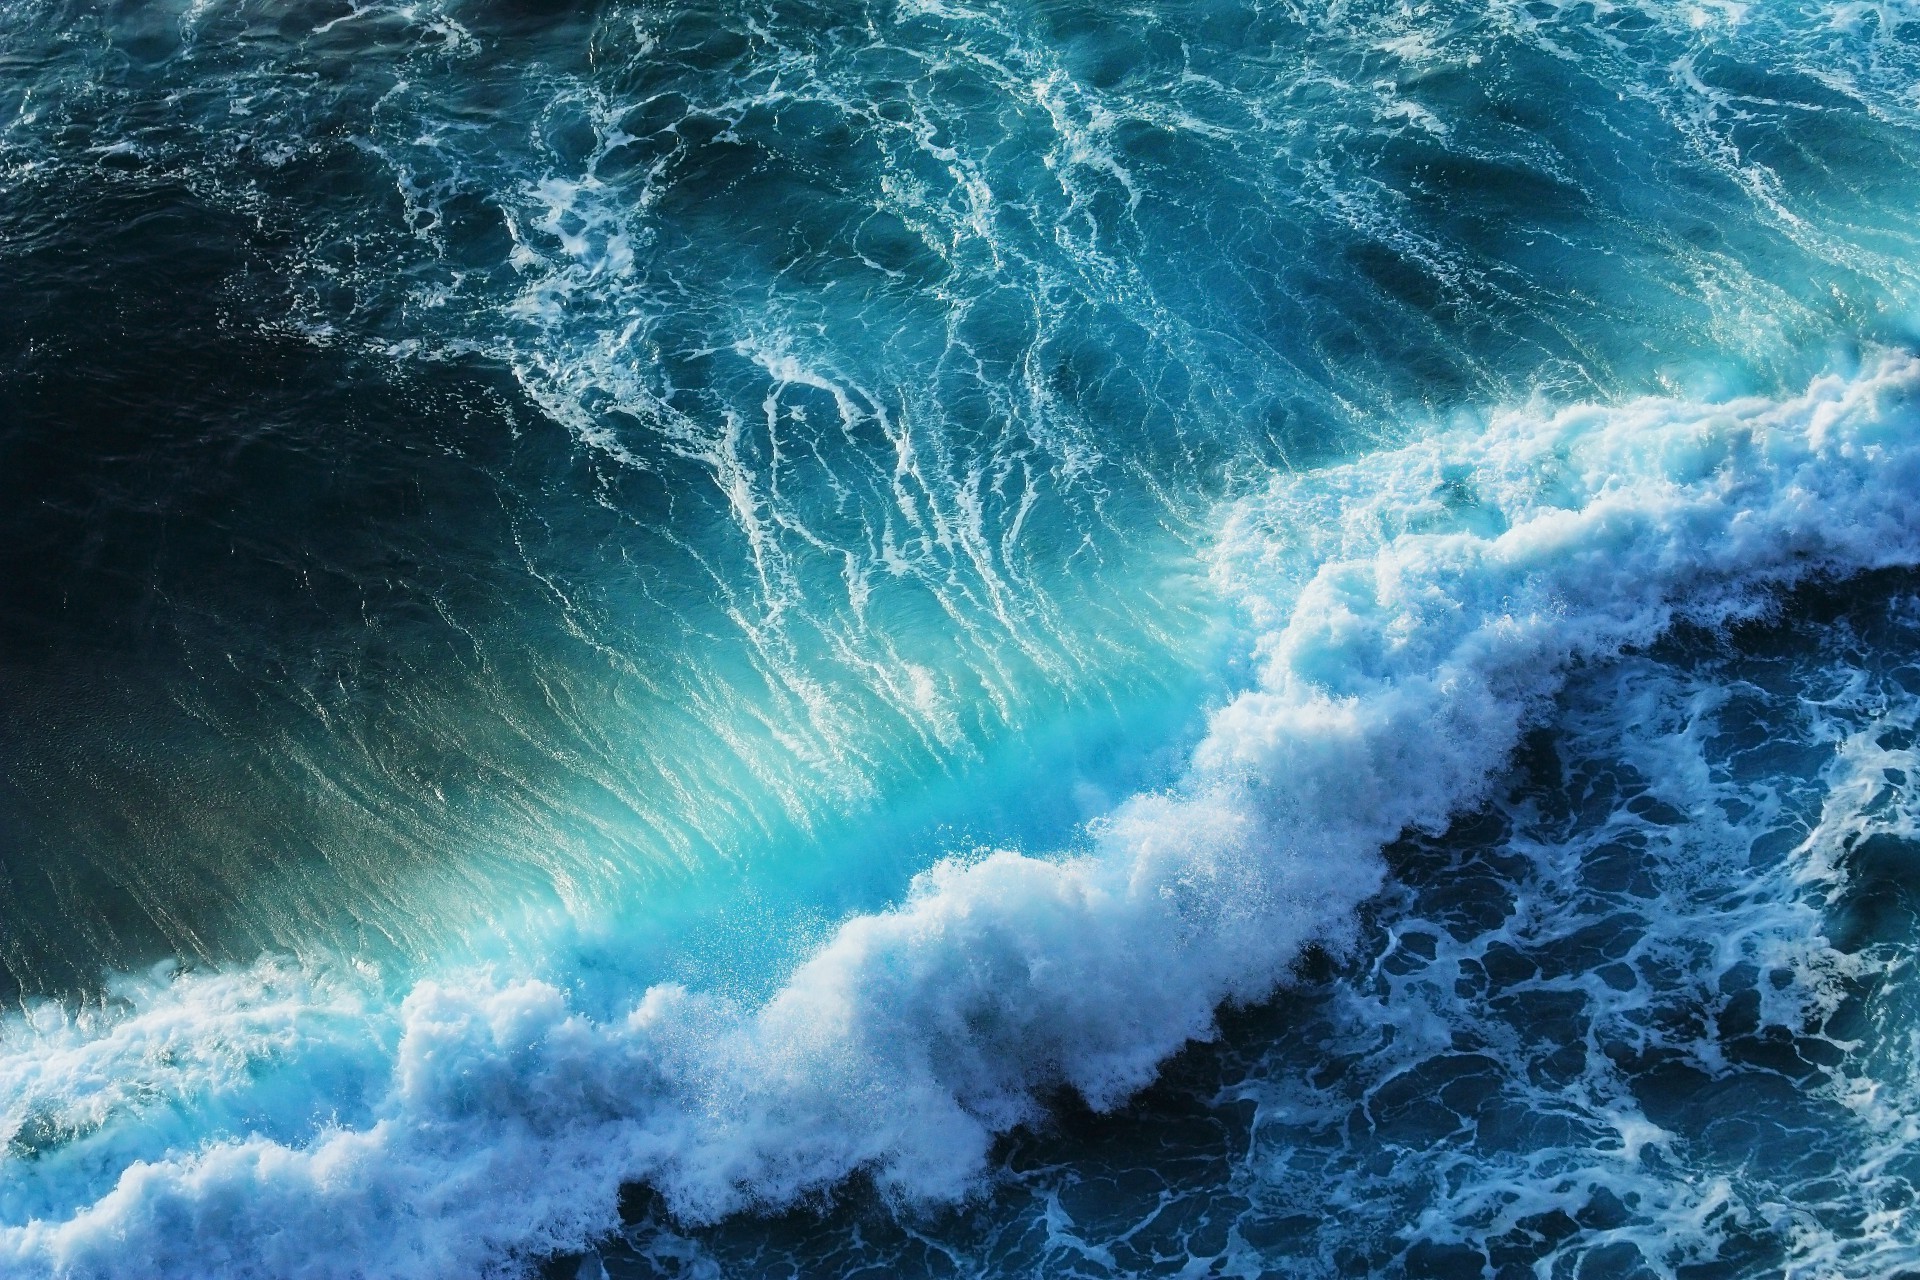 water ocean sea wave storm surf foam motion splash nature weather outdoors